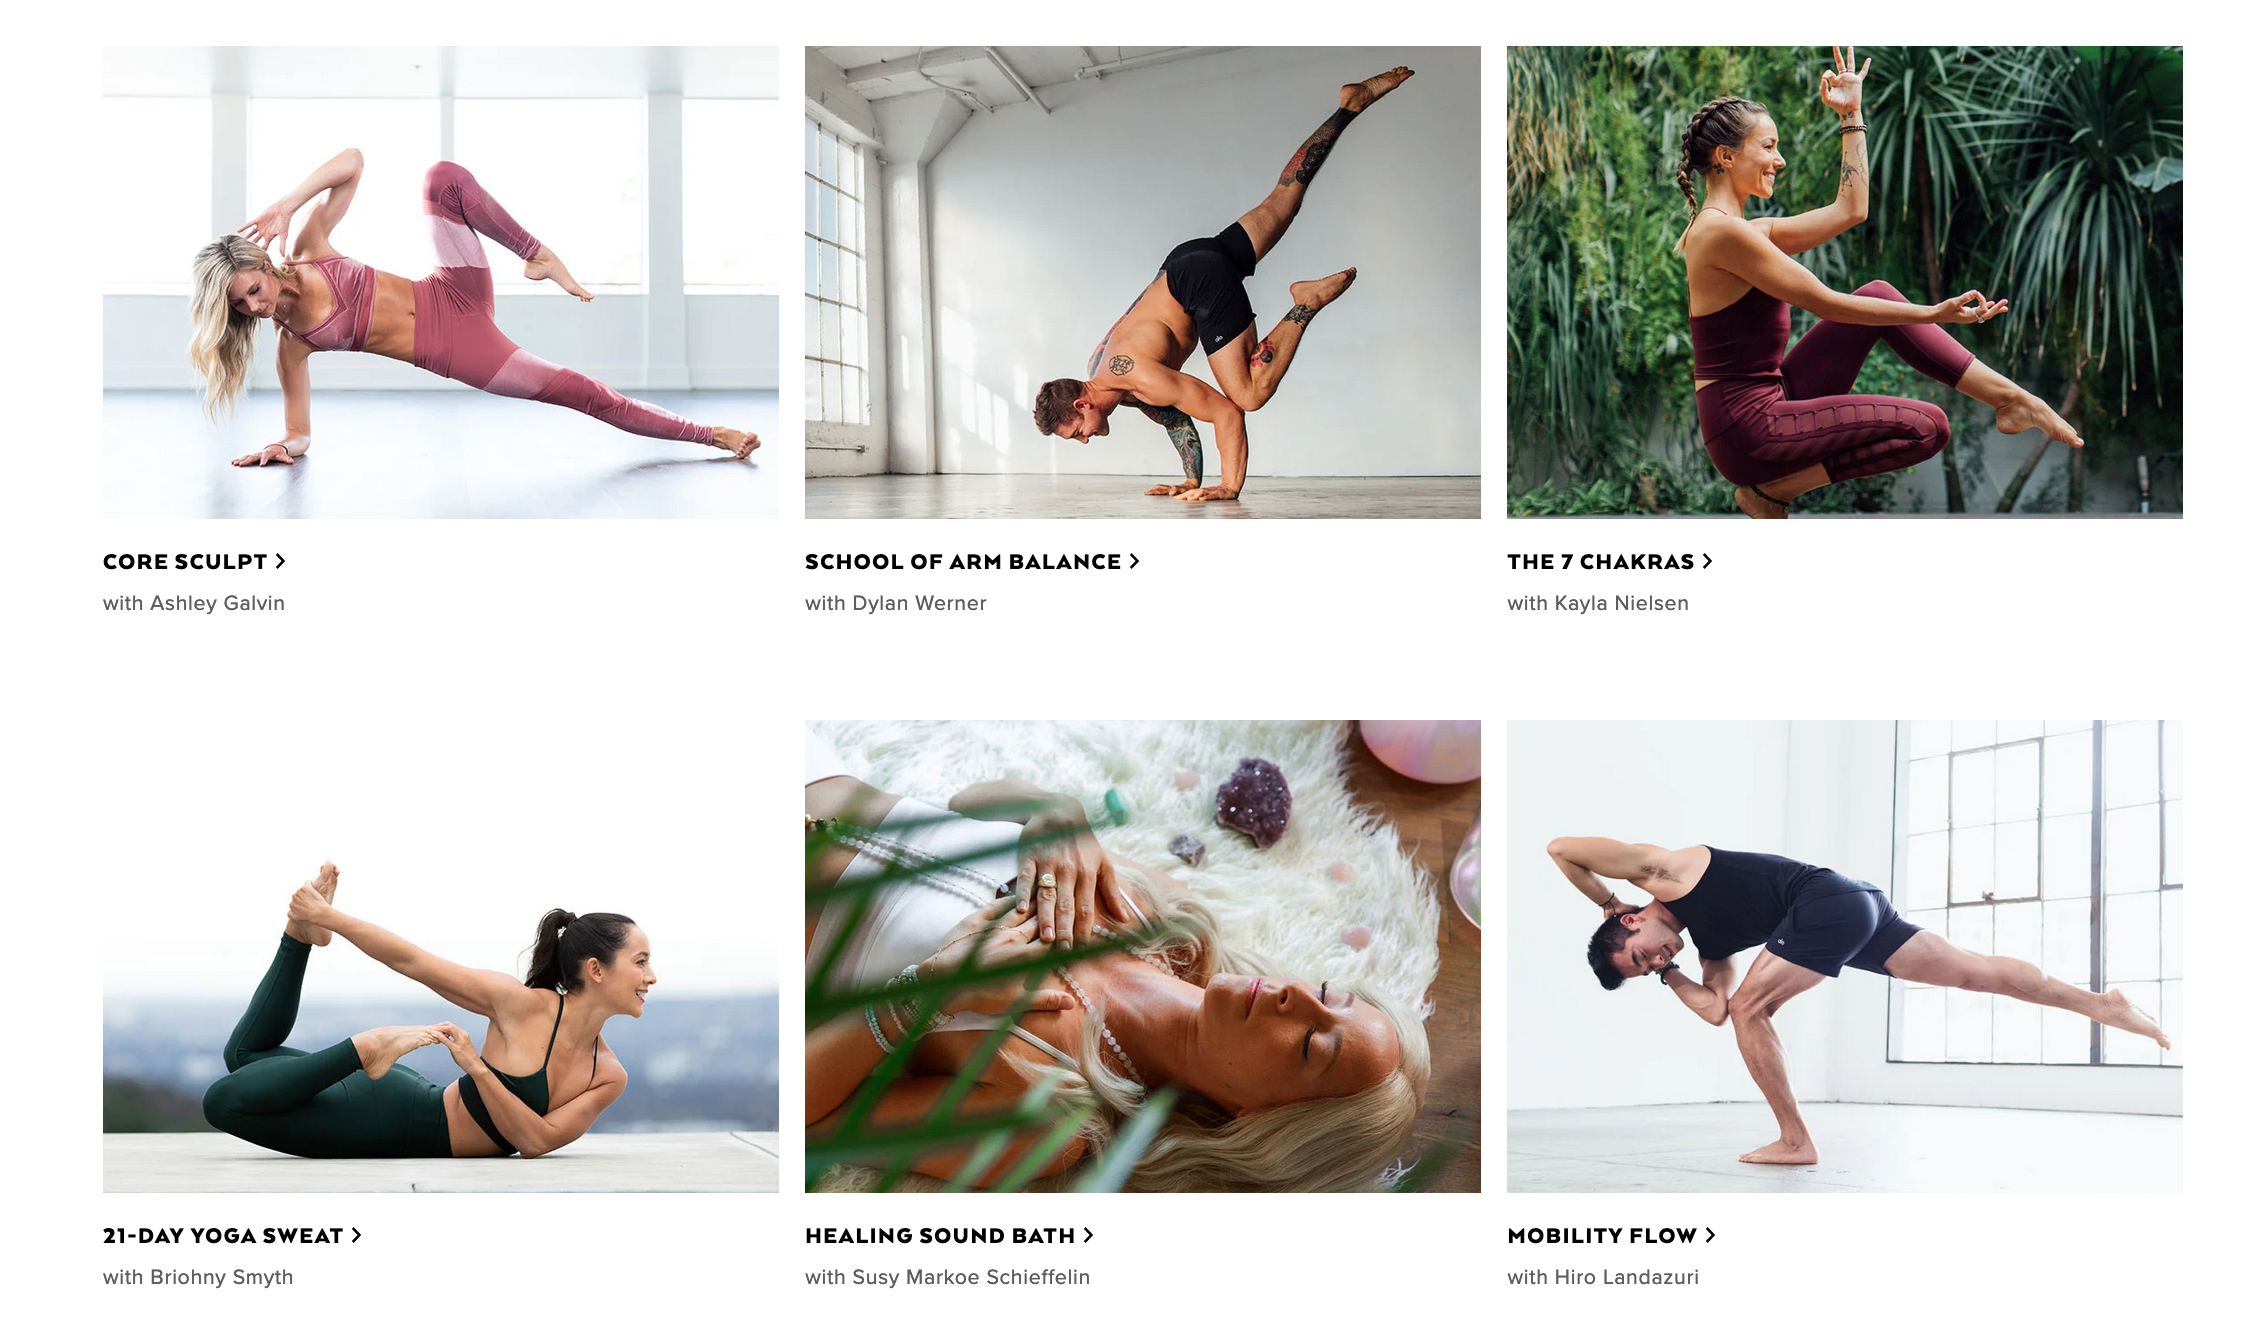 Alo Yoga Pose - Lotus Position's Code & Price - RblxTrade